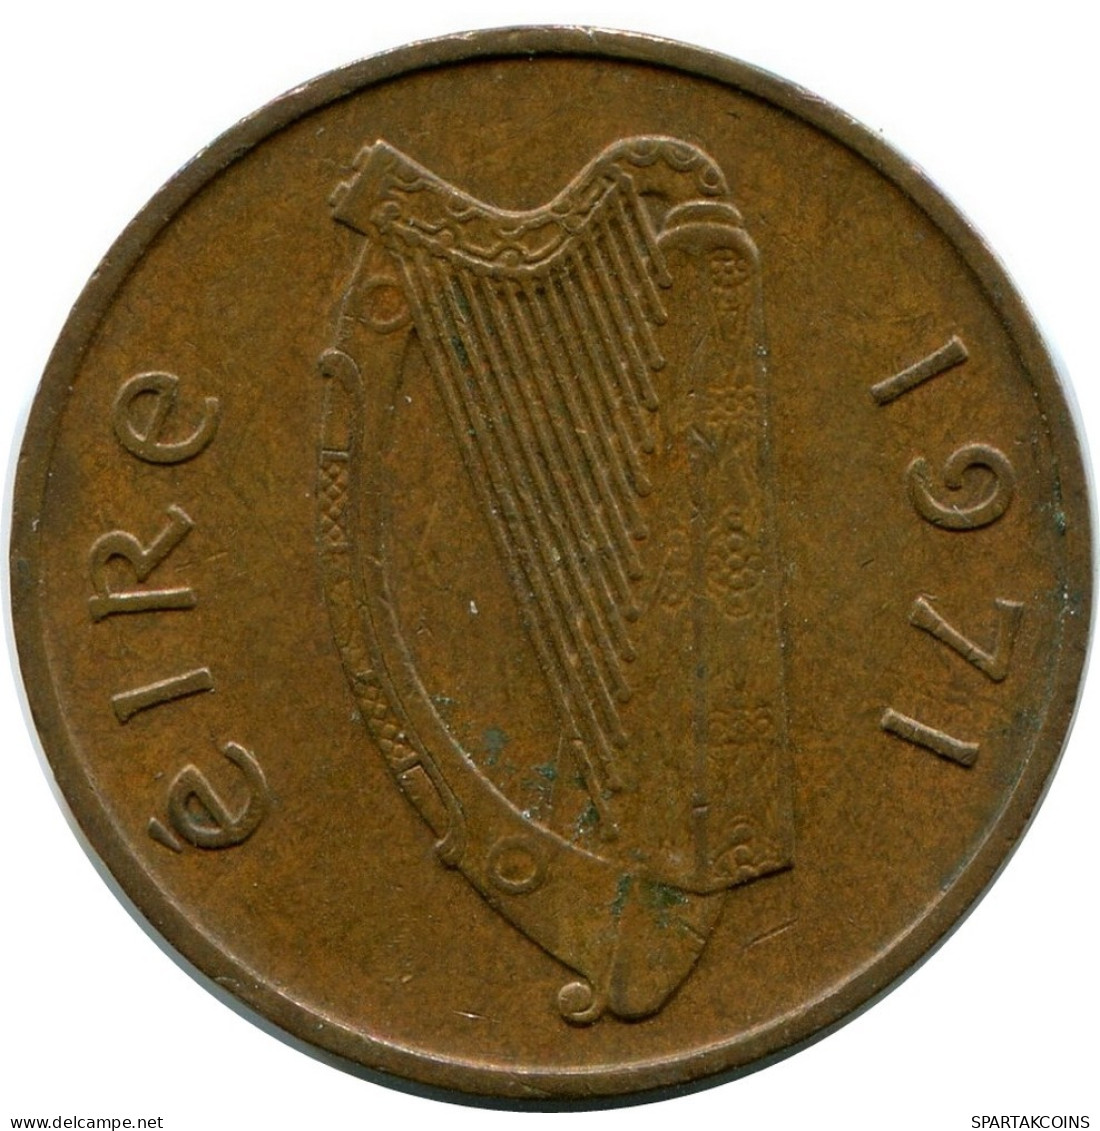 1 PENNY 1971 IRELAND Coin #AY258.2.U.A - Ireland